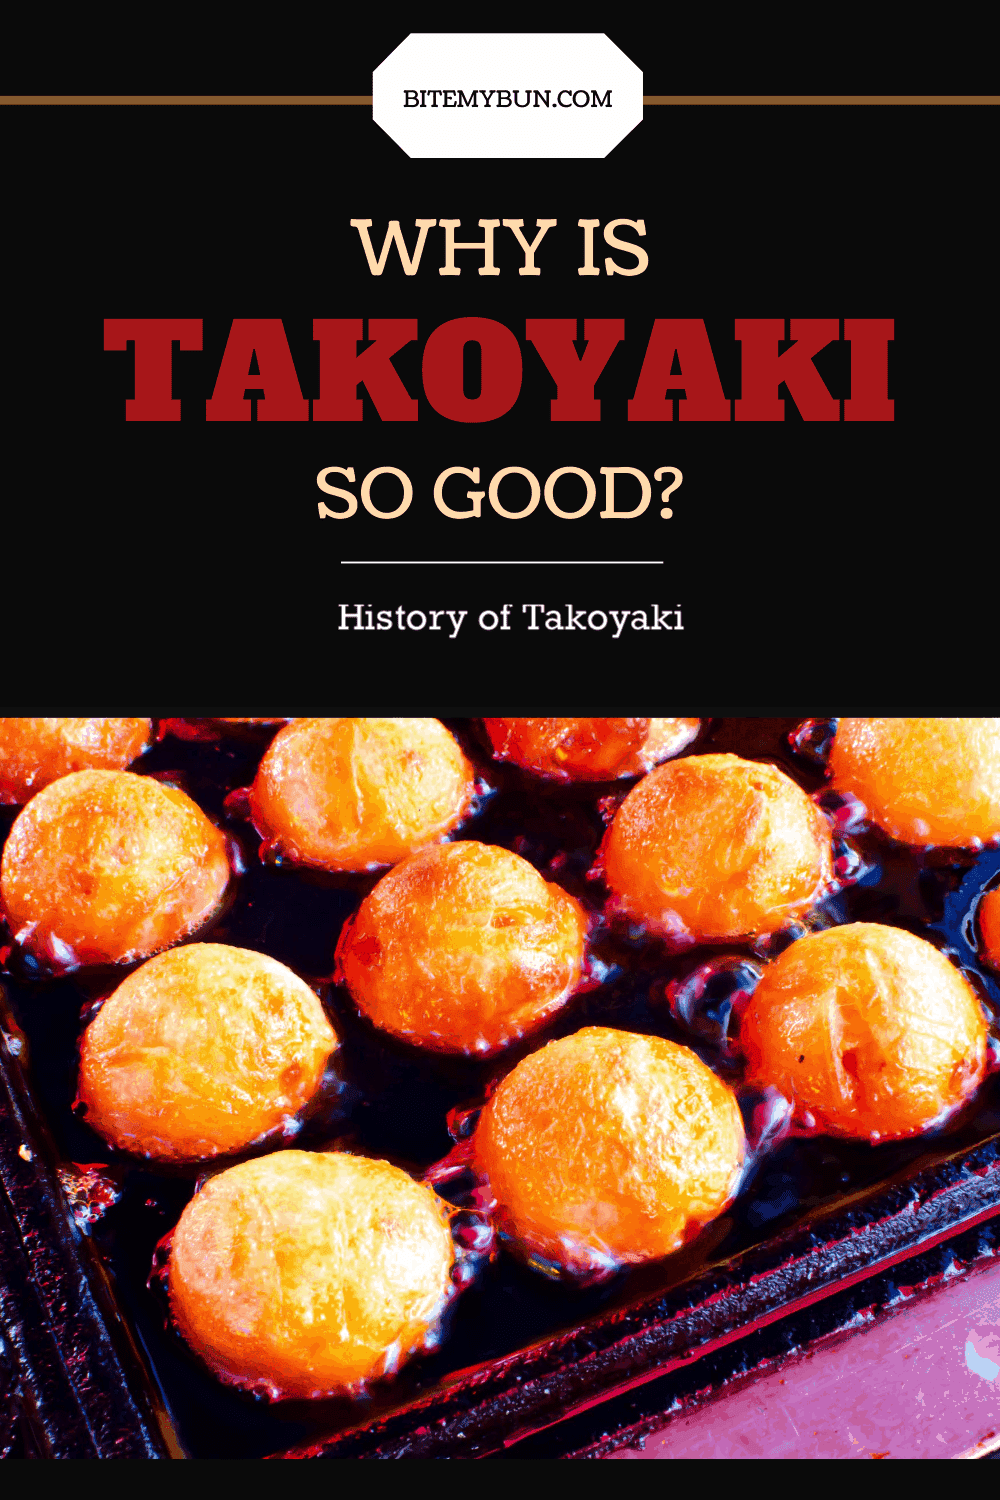 Pourquoi le takoyaki est-il si bon